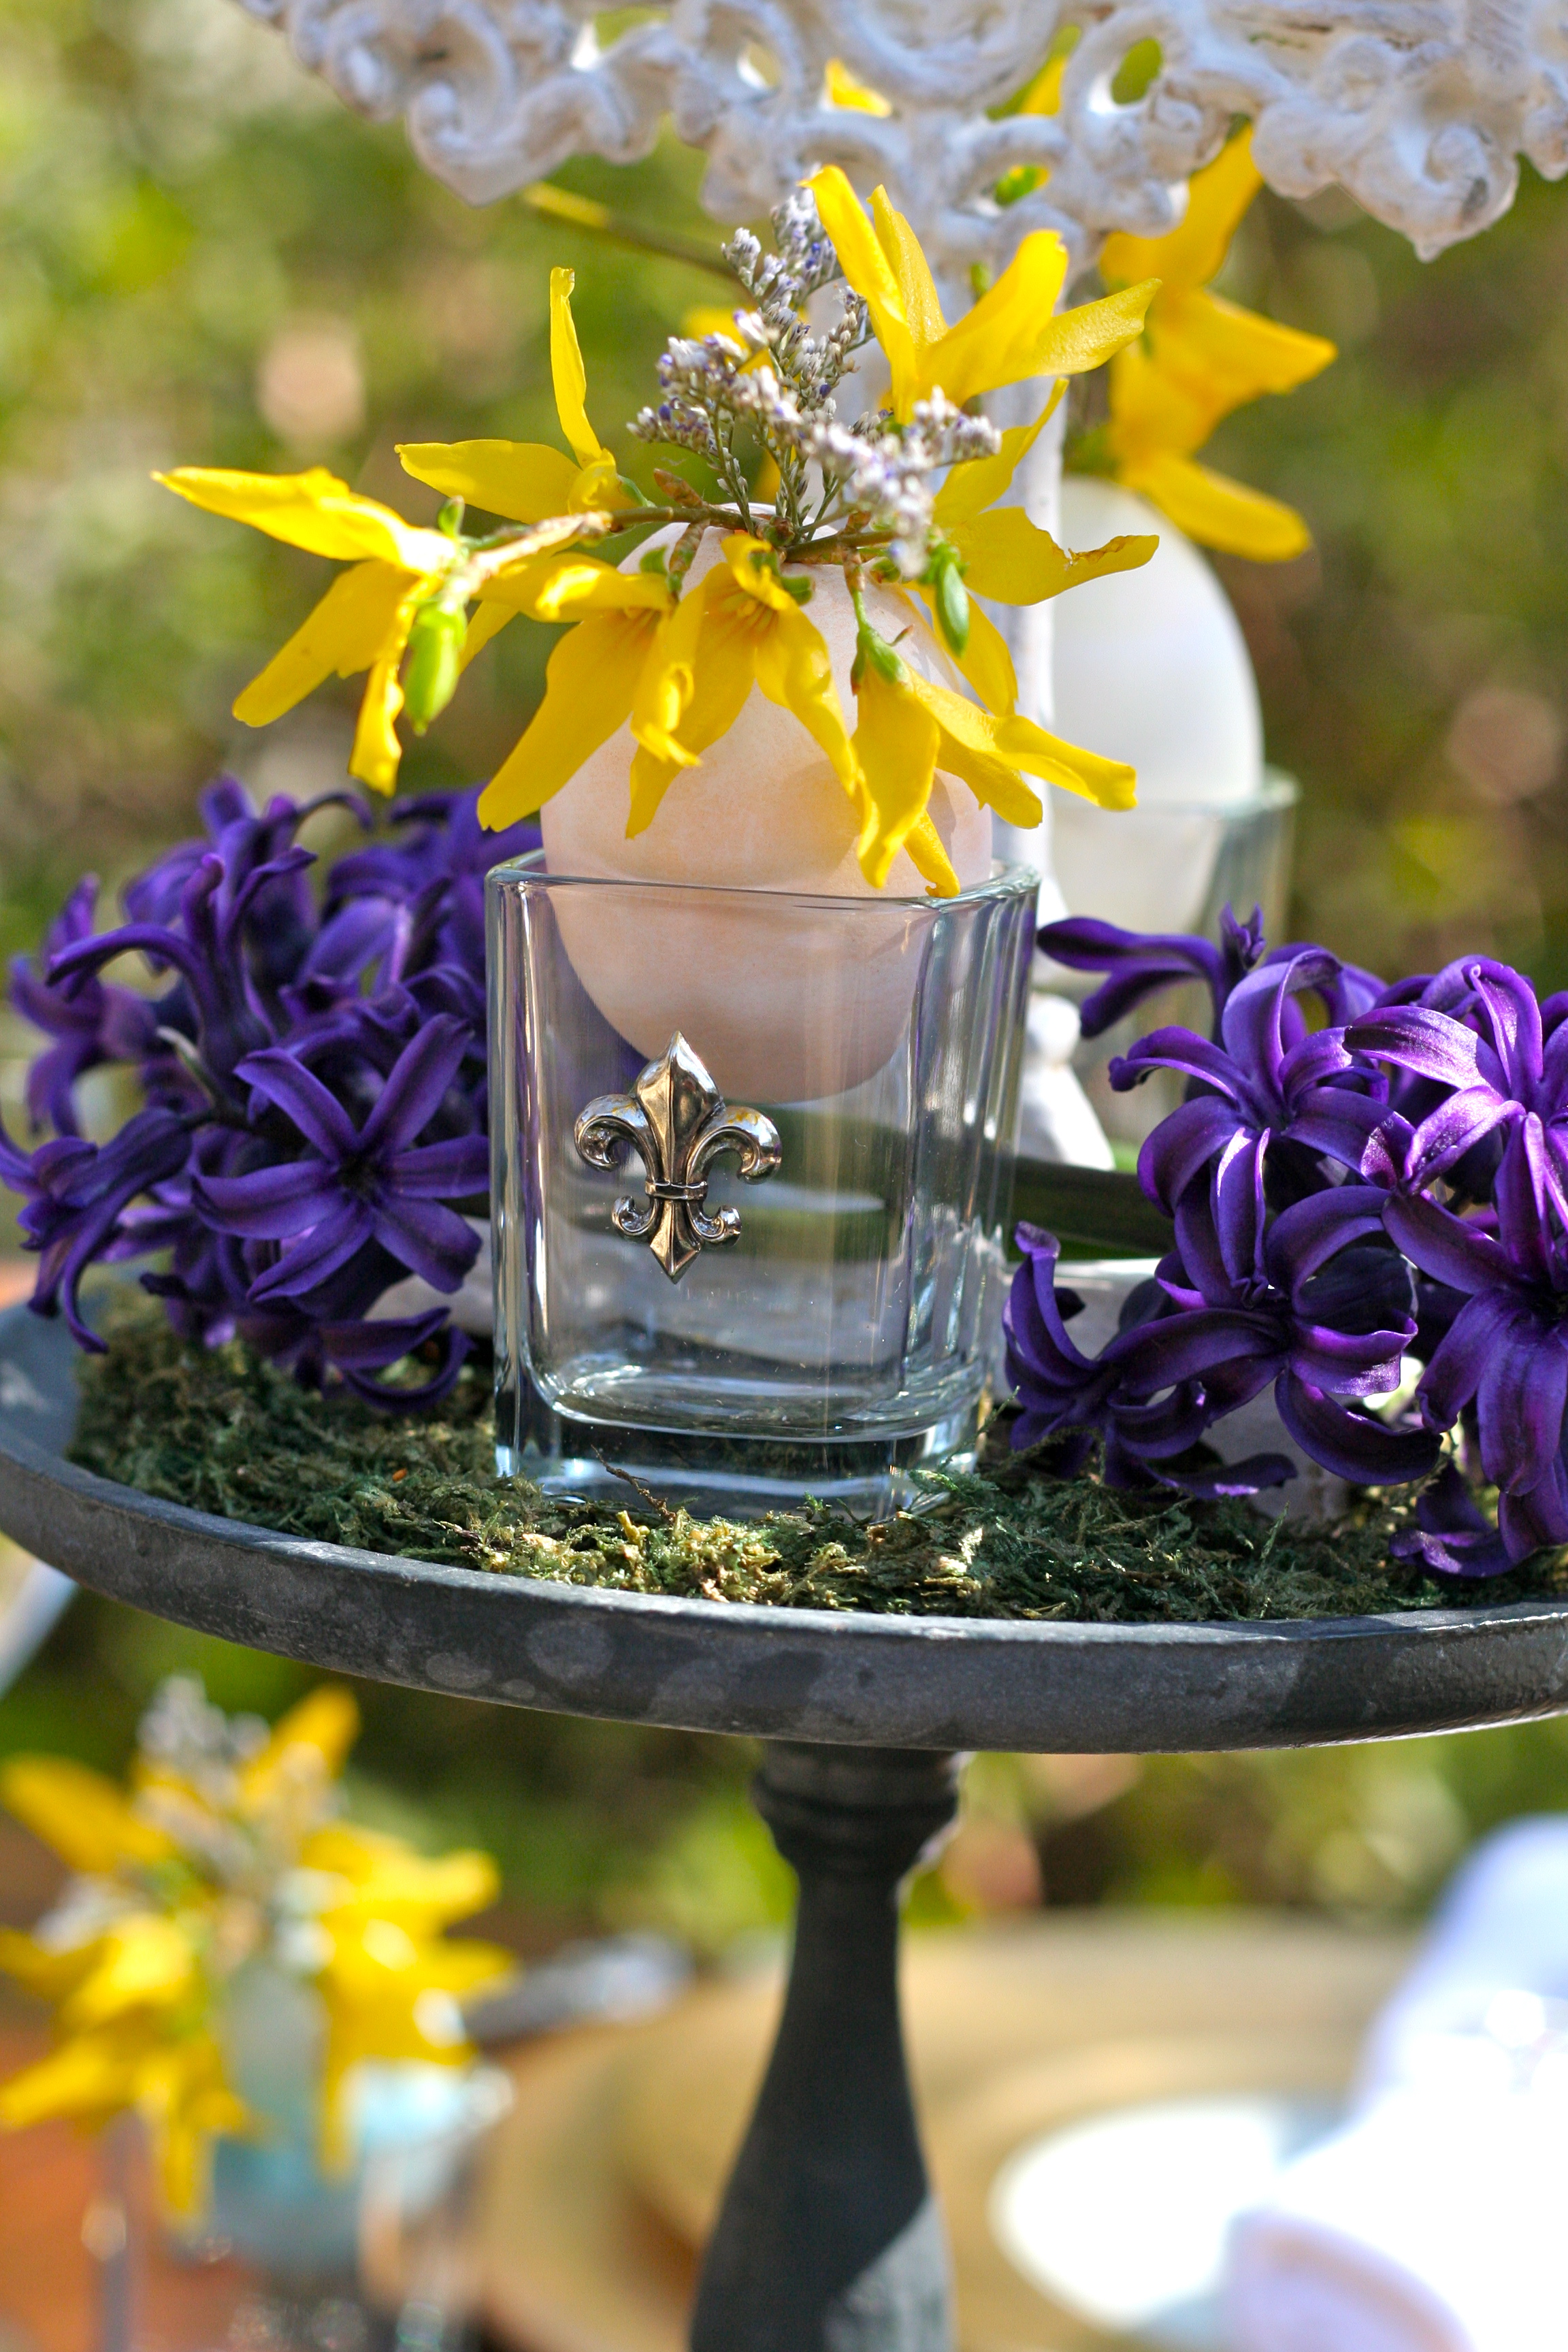 flower displays create interest in fleur de lis shot glass